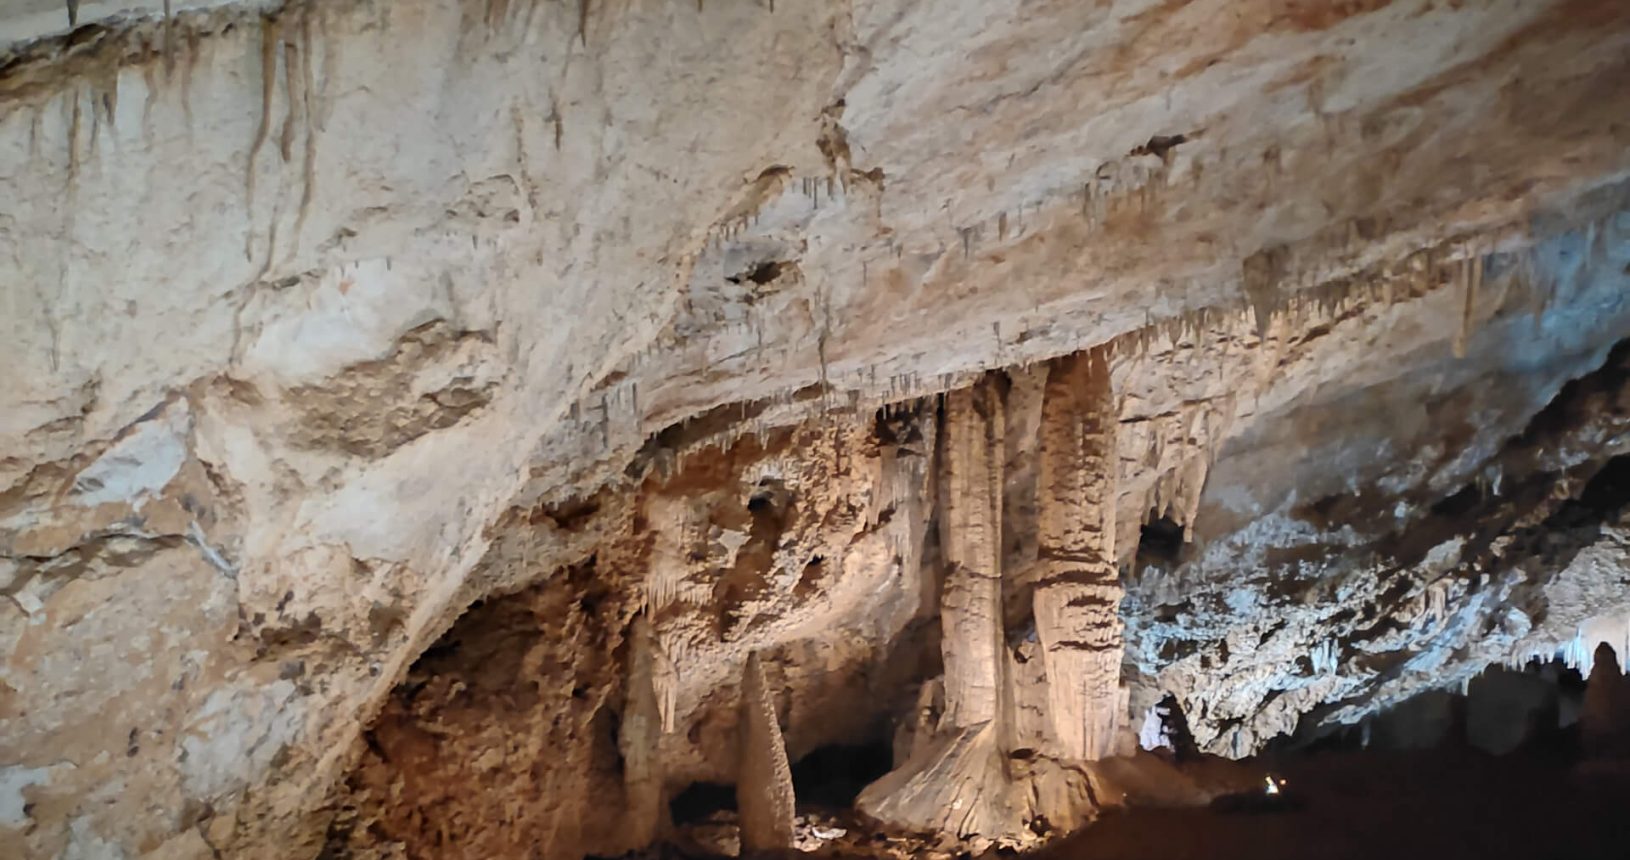 Stalactites and stalagmites in Lipa Cave